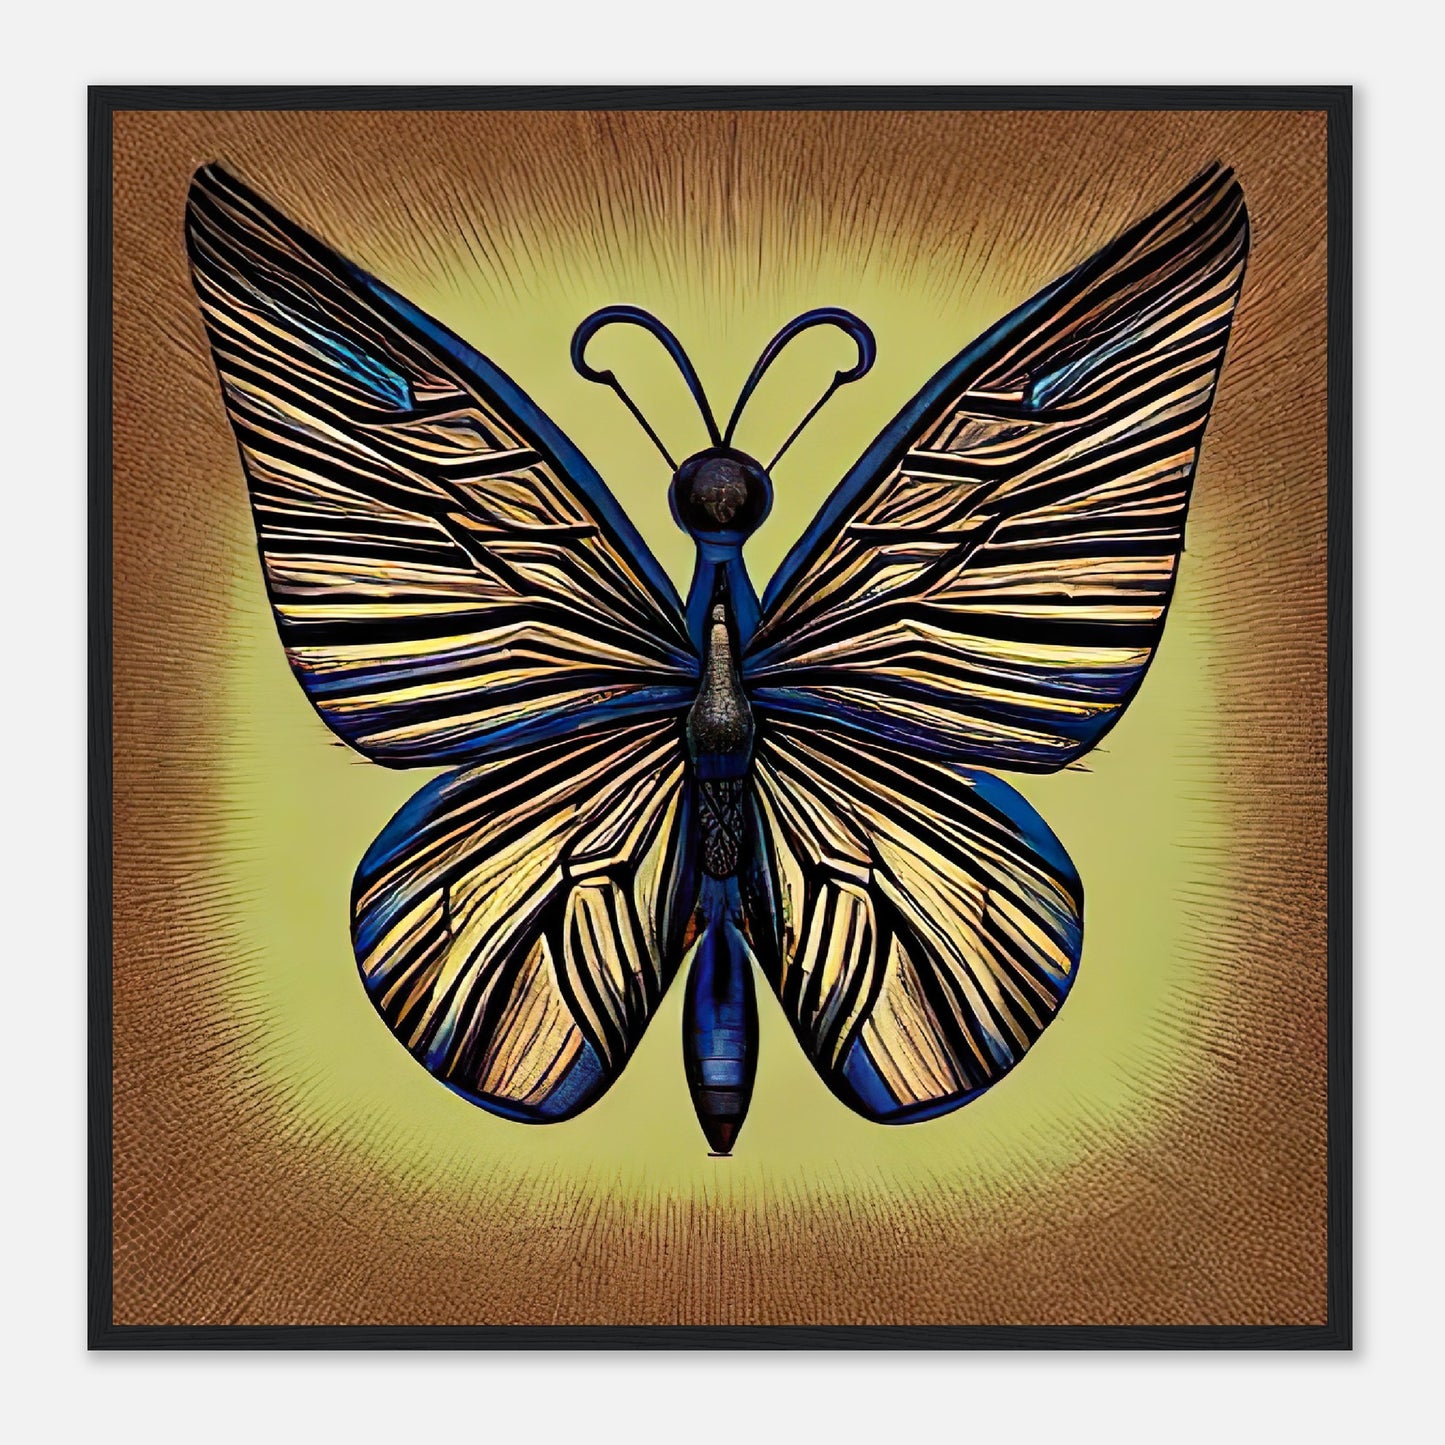 Gerahmtes Premium-Poster - Schmetterling - Digitaler Stil, KI-Kunst - RolConArt, Digitalkunst - Kreative Vielfalt, 70x70-cm-28x28-Schwarz